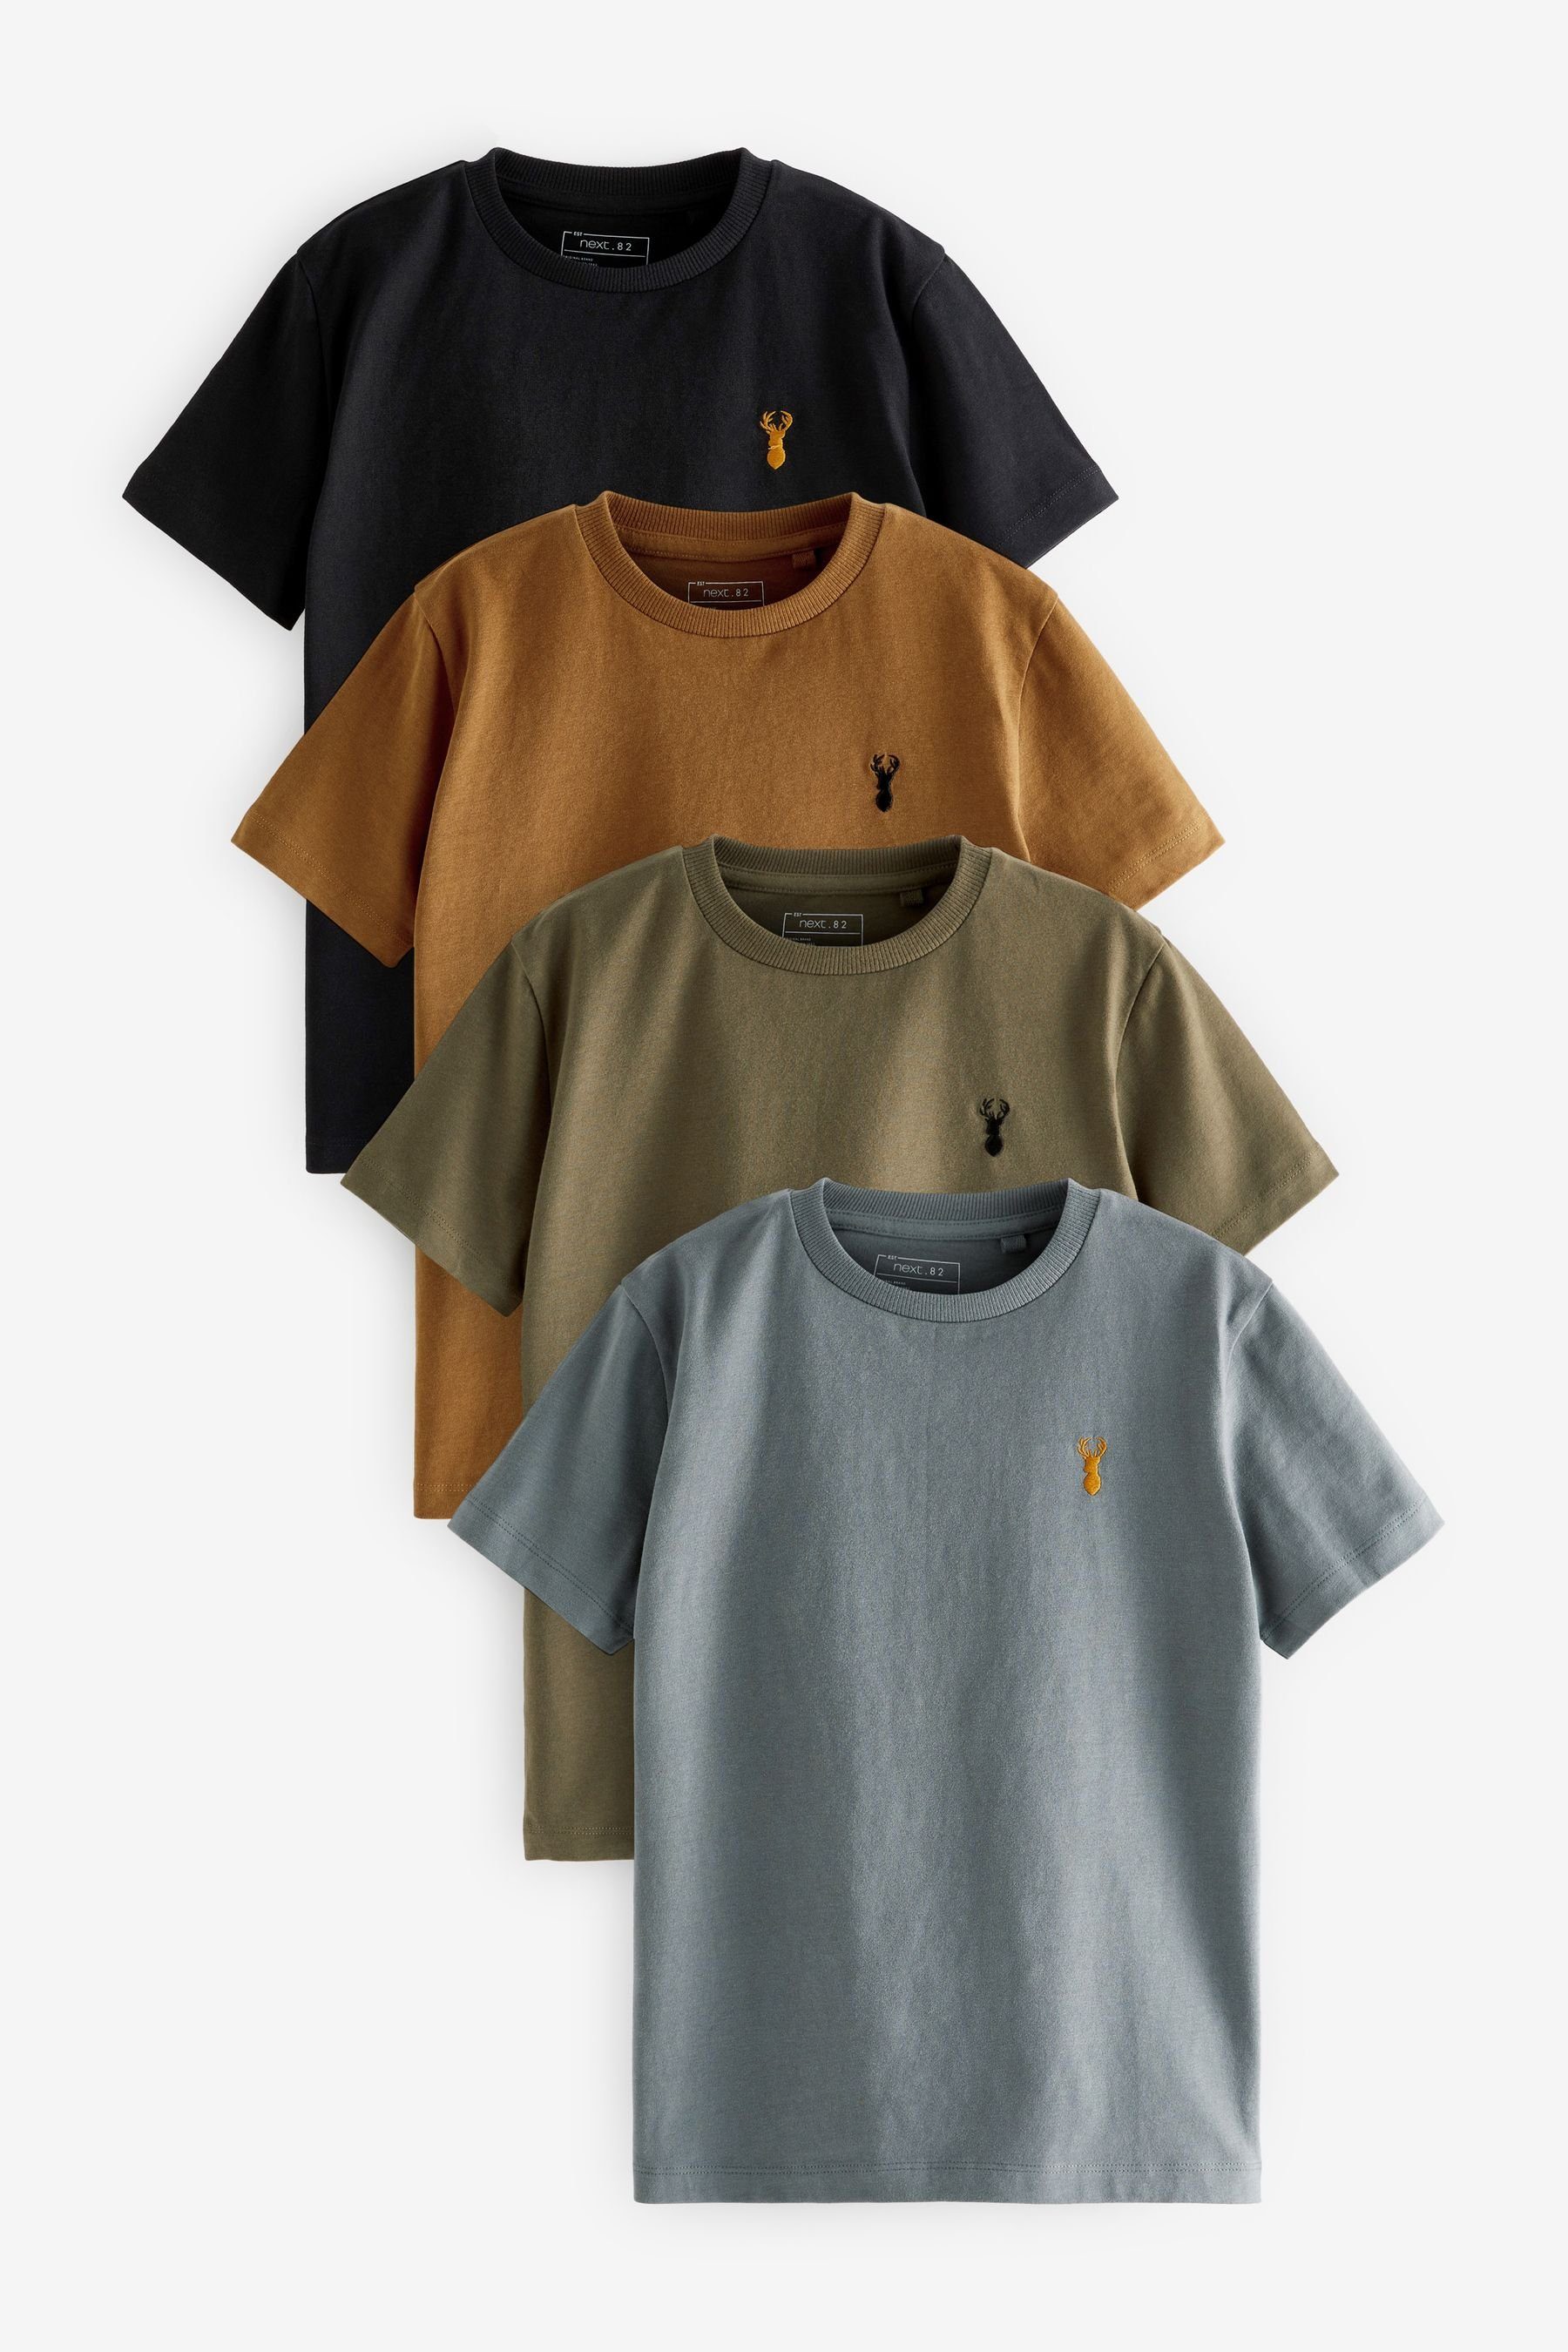 Next T-Shirt 4er-Pack Kurzarm-T-Shirts mit Hirsch-Stickerei (4-tlg) Grey/Black/Khaki Green/Tan Brown